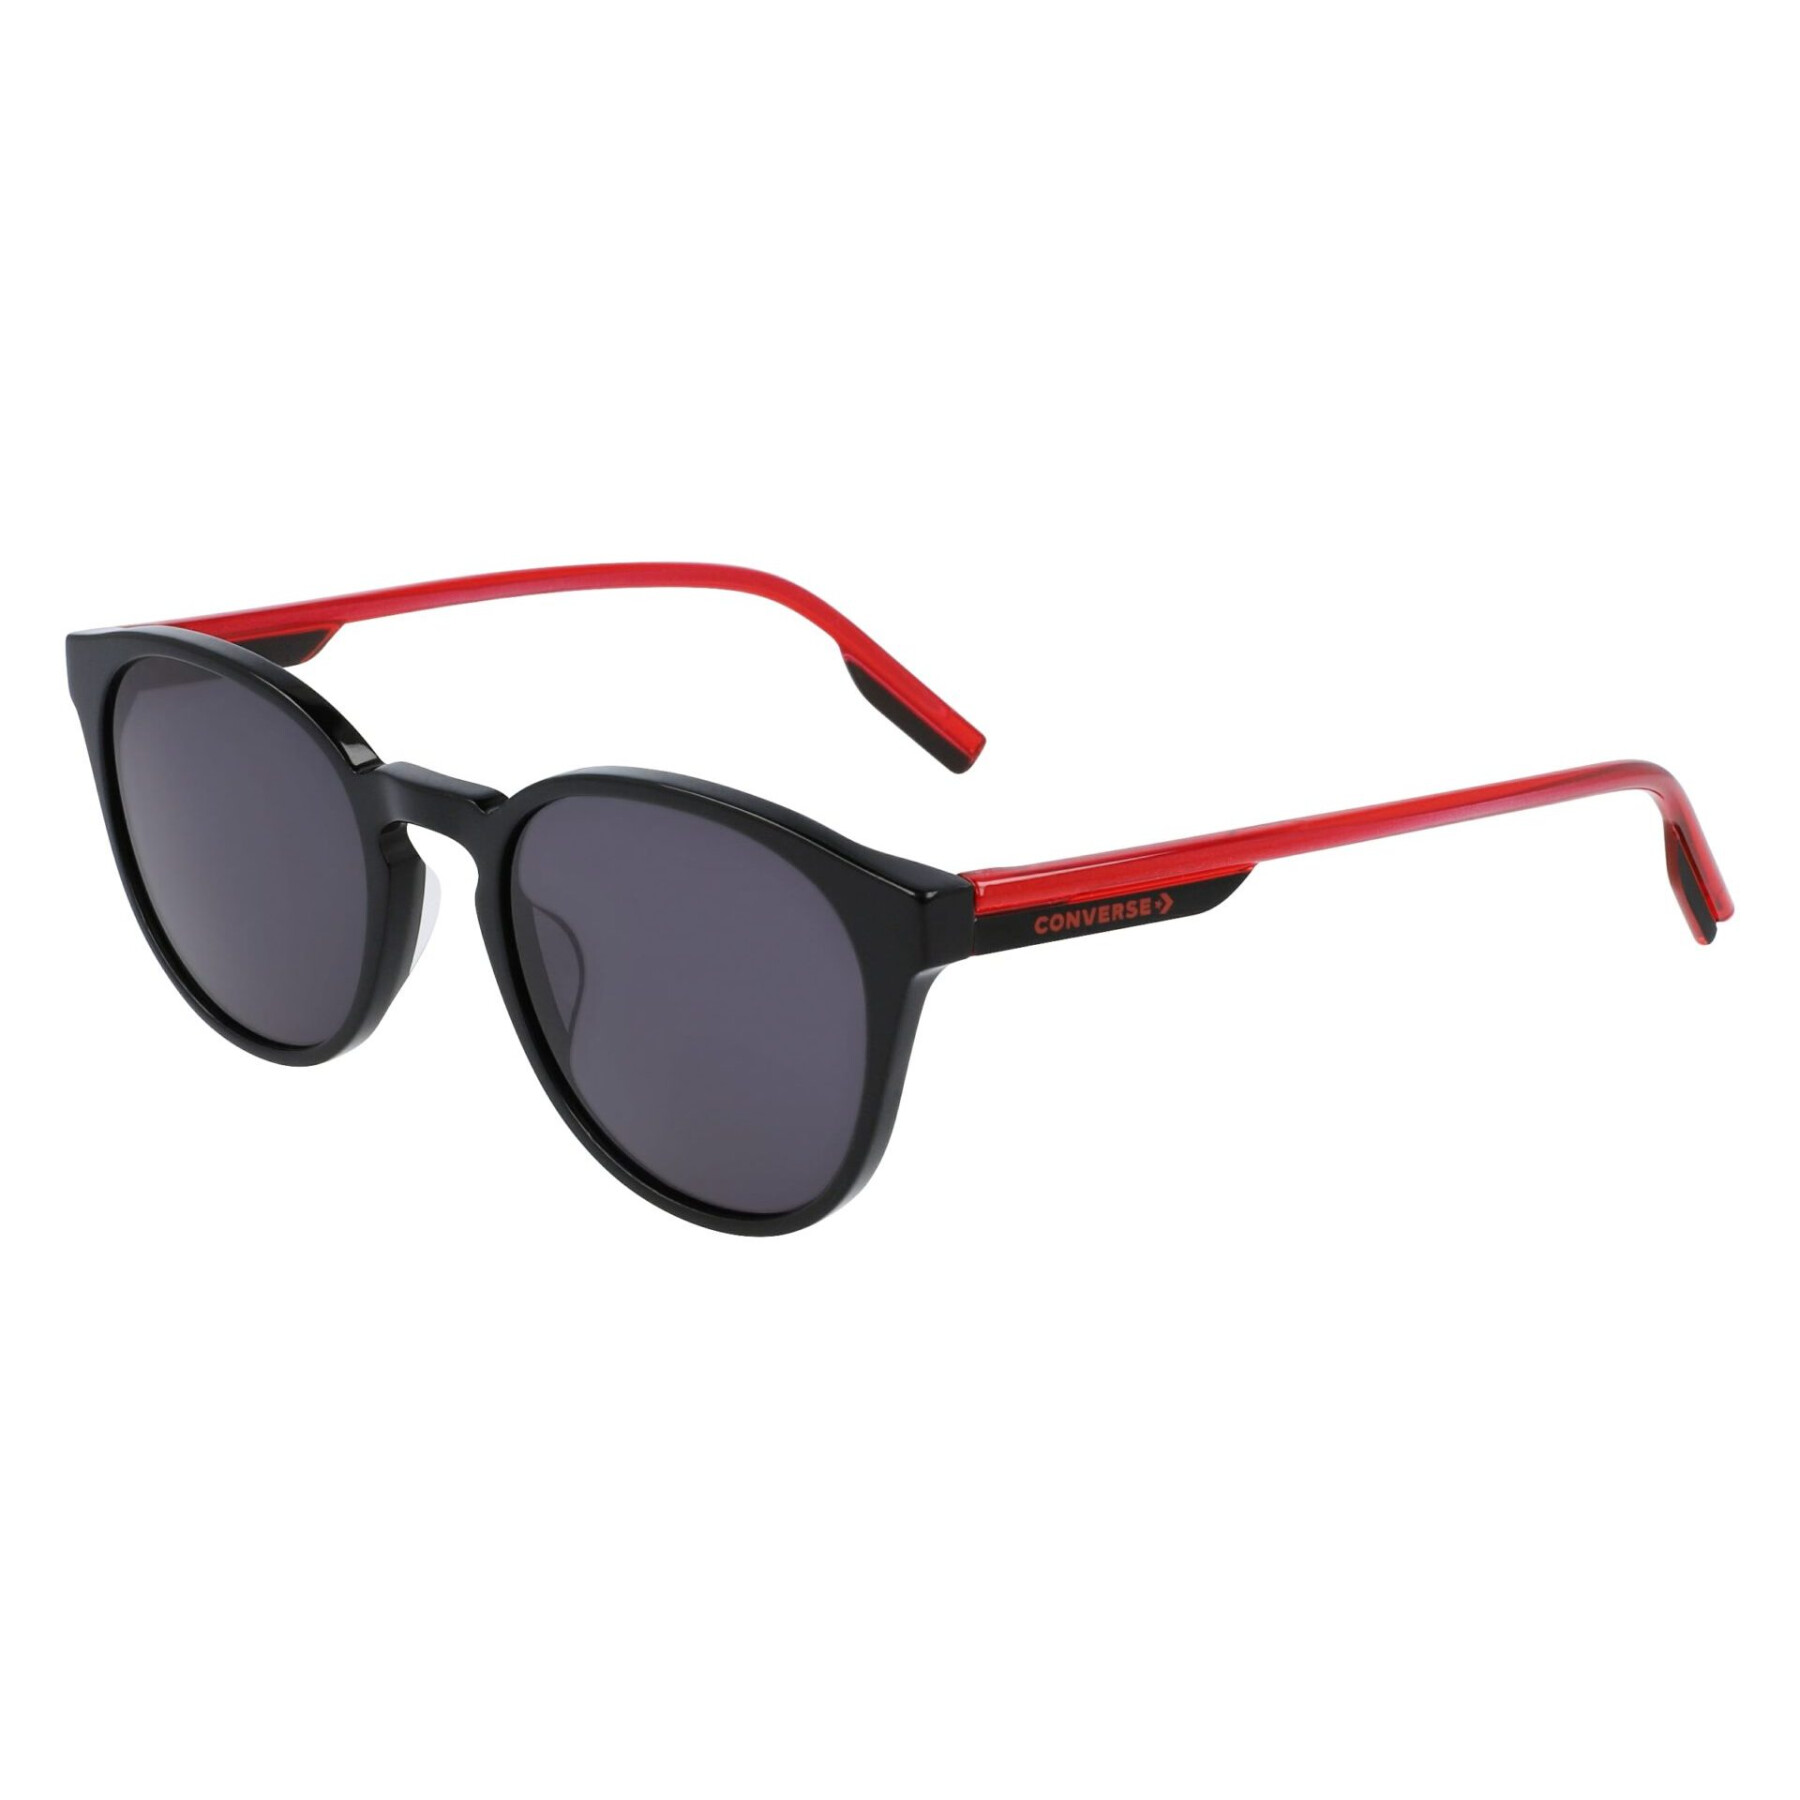 Sunglasses Converse CV503SDISRUP